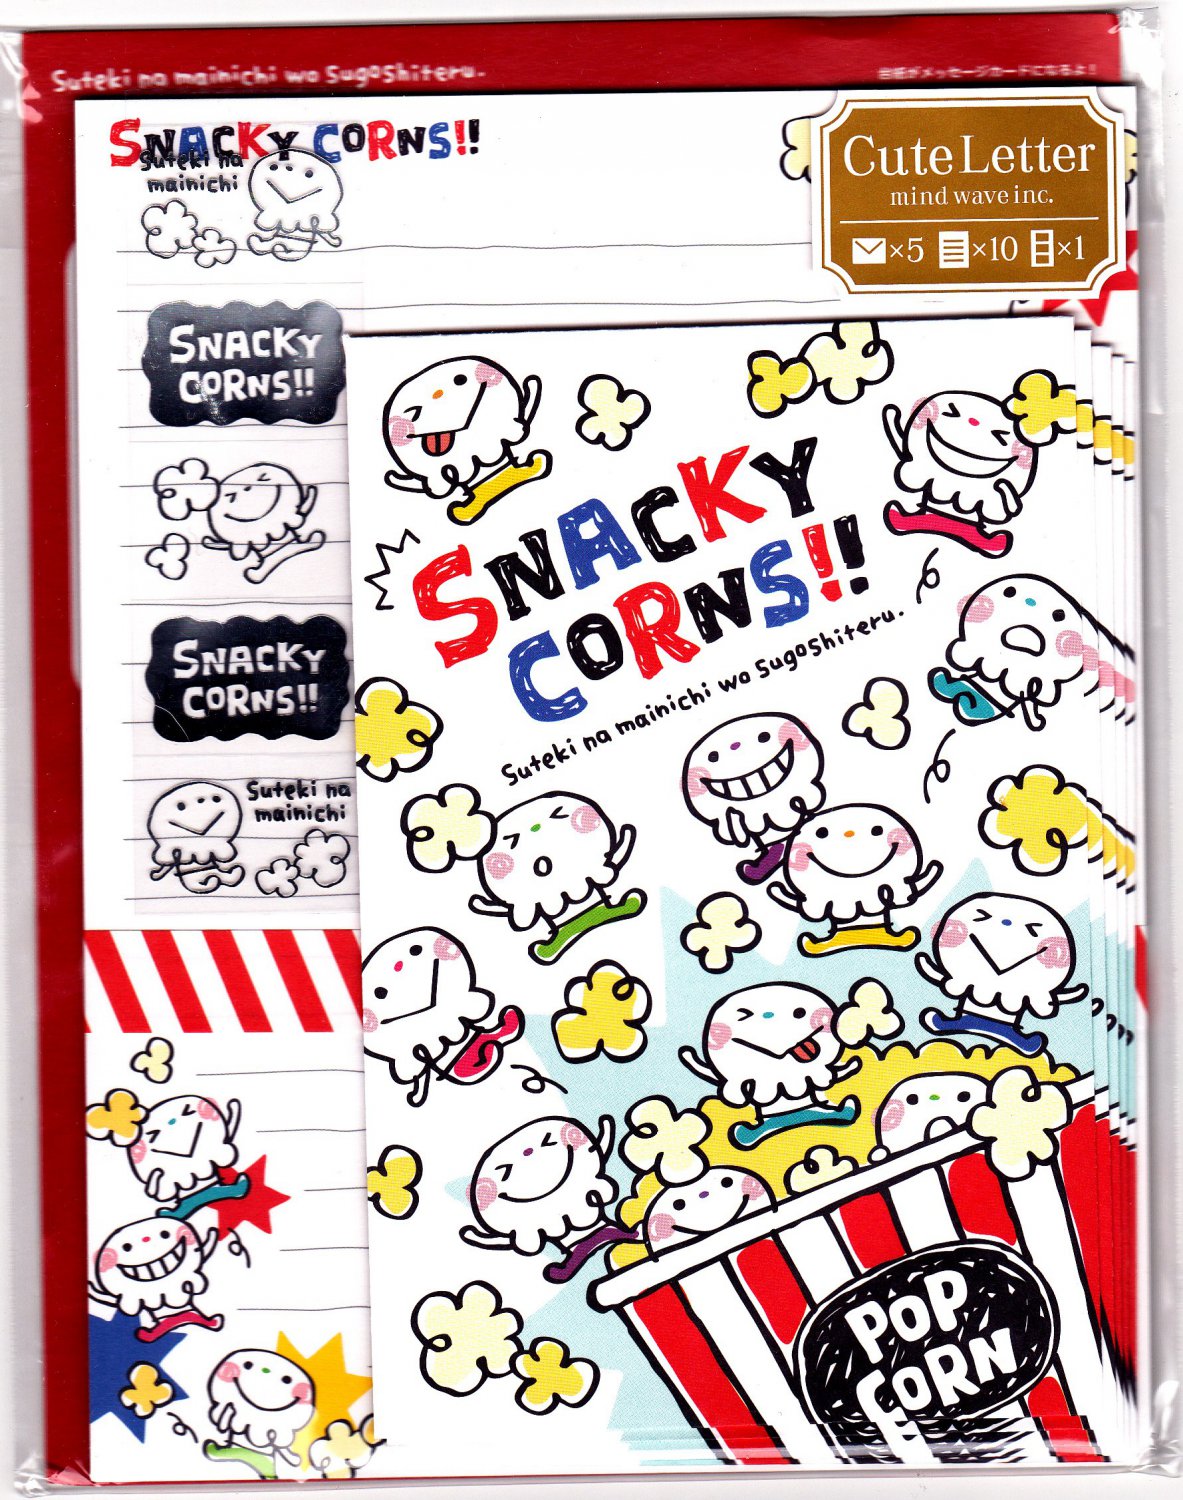 Mind Wave Japan Snacky Corns Letter Set With Stickers Kawaii